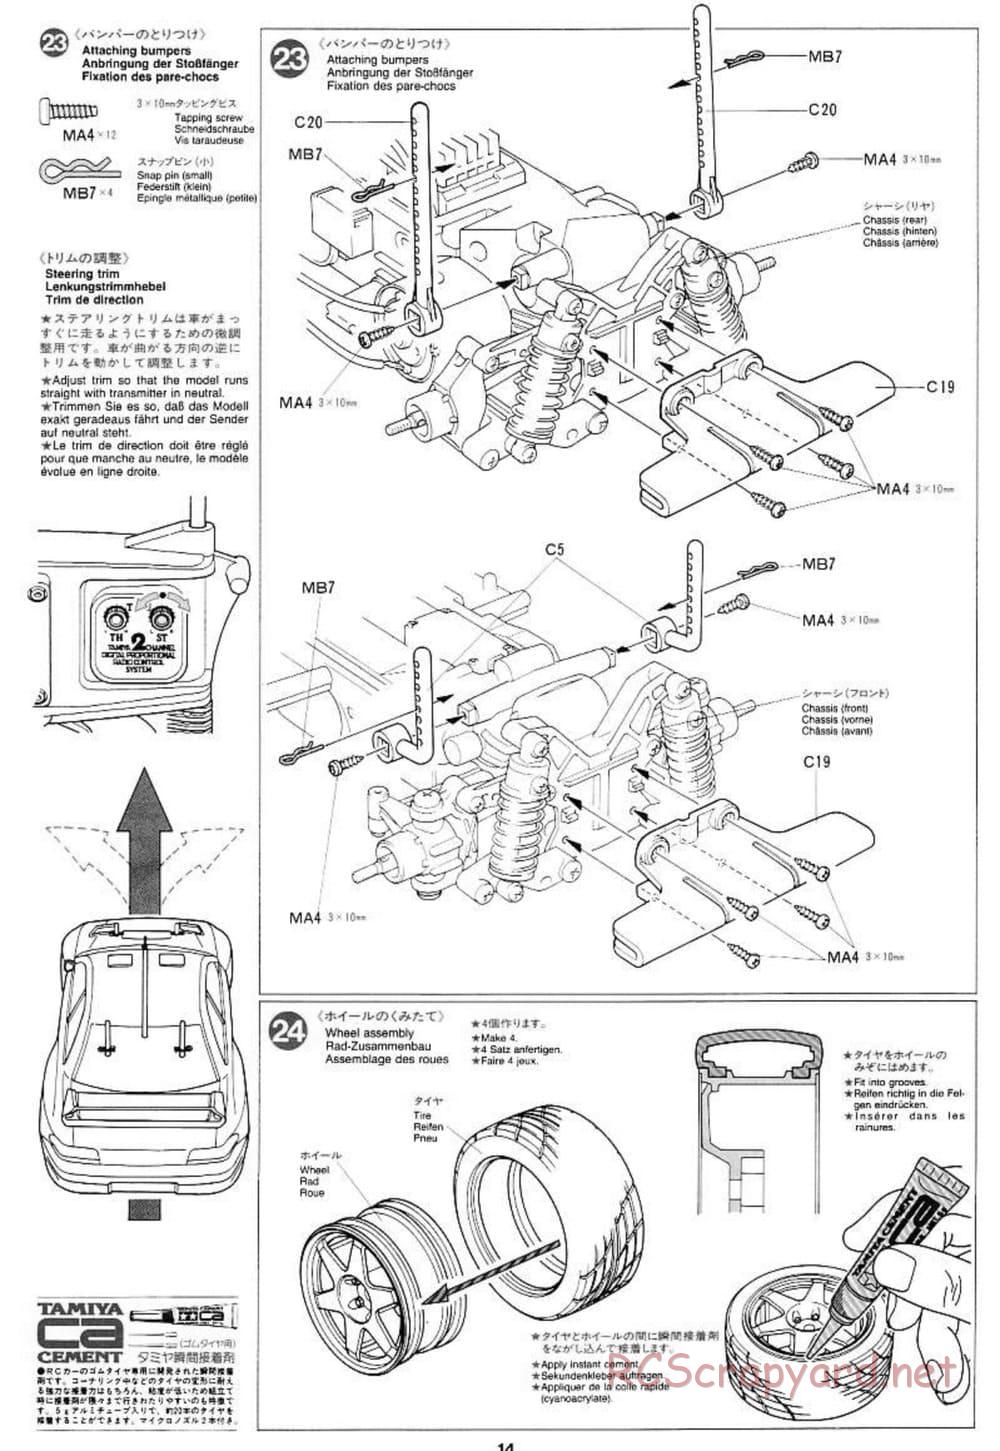 Tamiya - Subaru Impreza WRC - TL-01 Chassis - Manual - Page 14